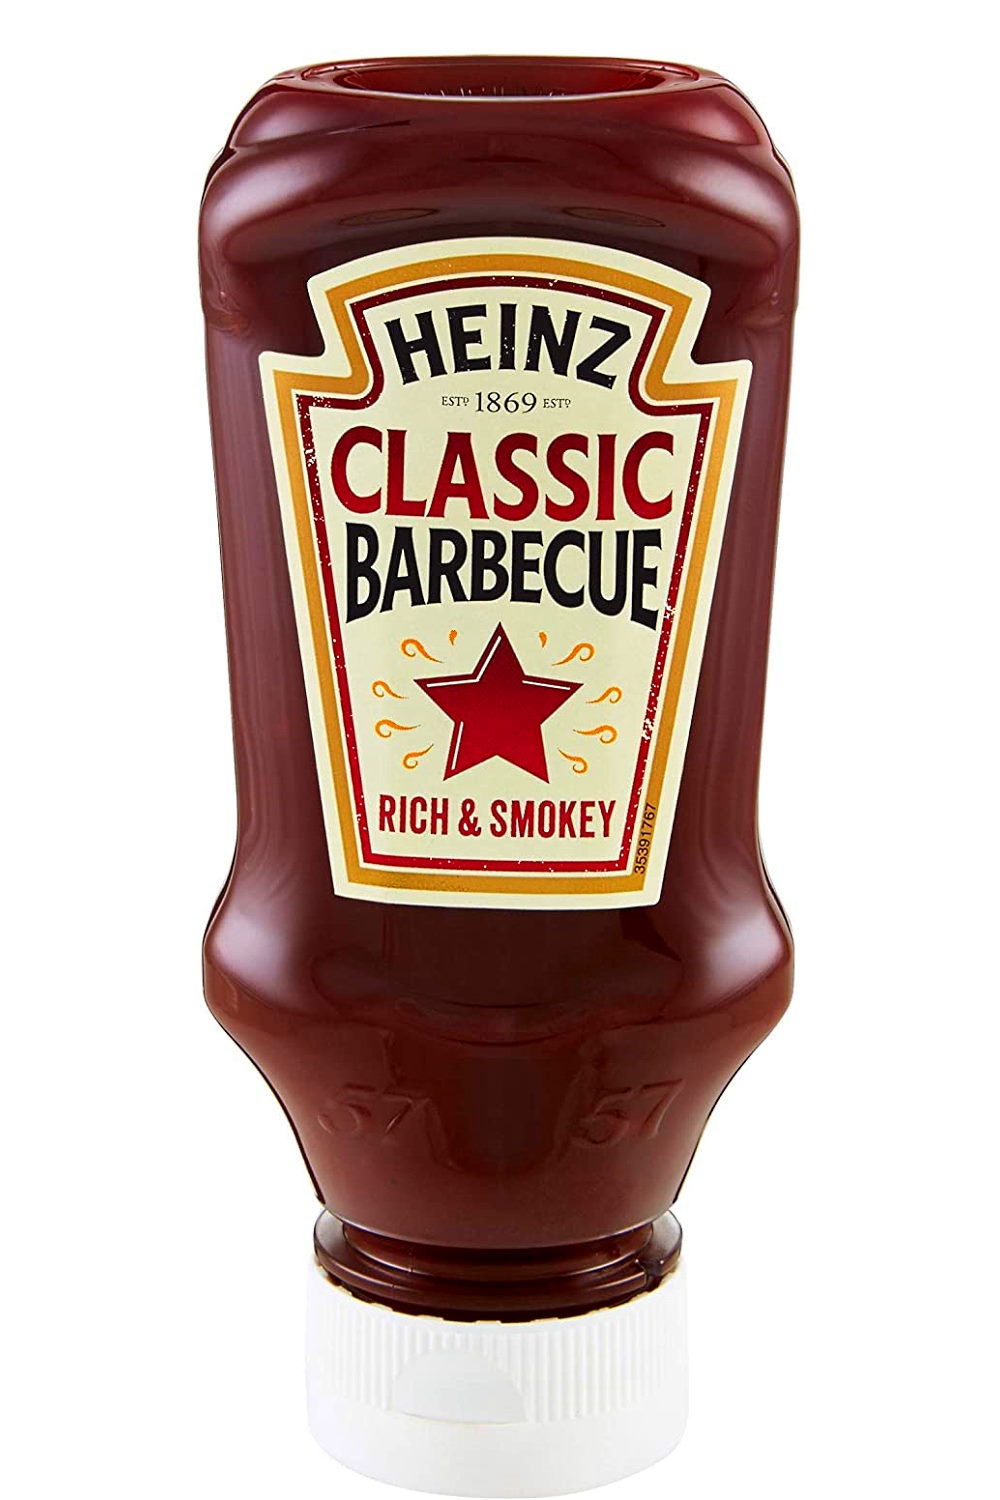 https://karadarshop.com/33801/barbecue-sauce-bbq-classic-heinz.jpg